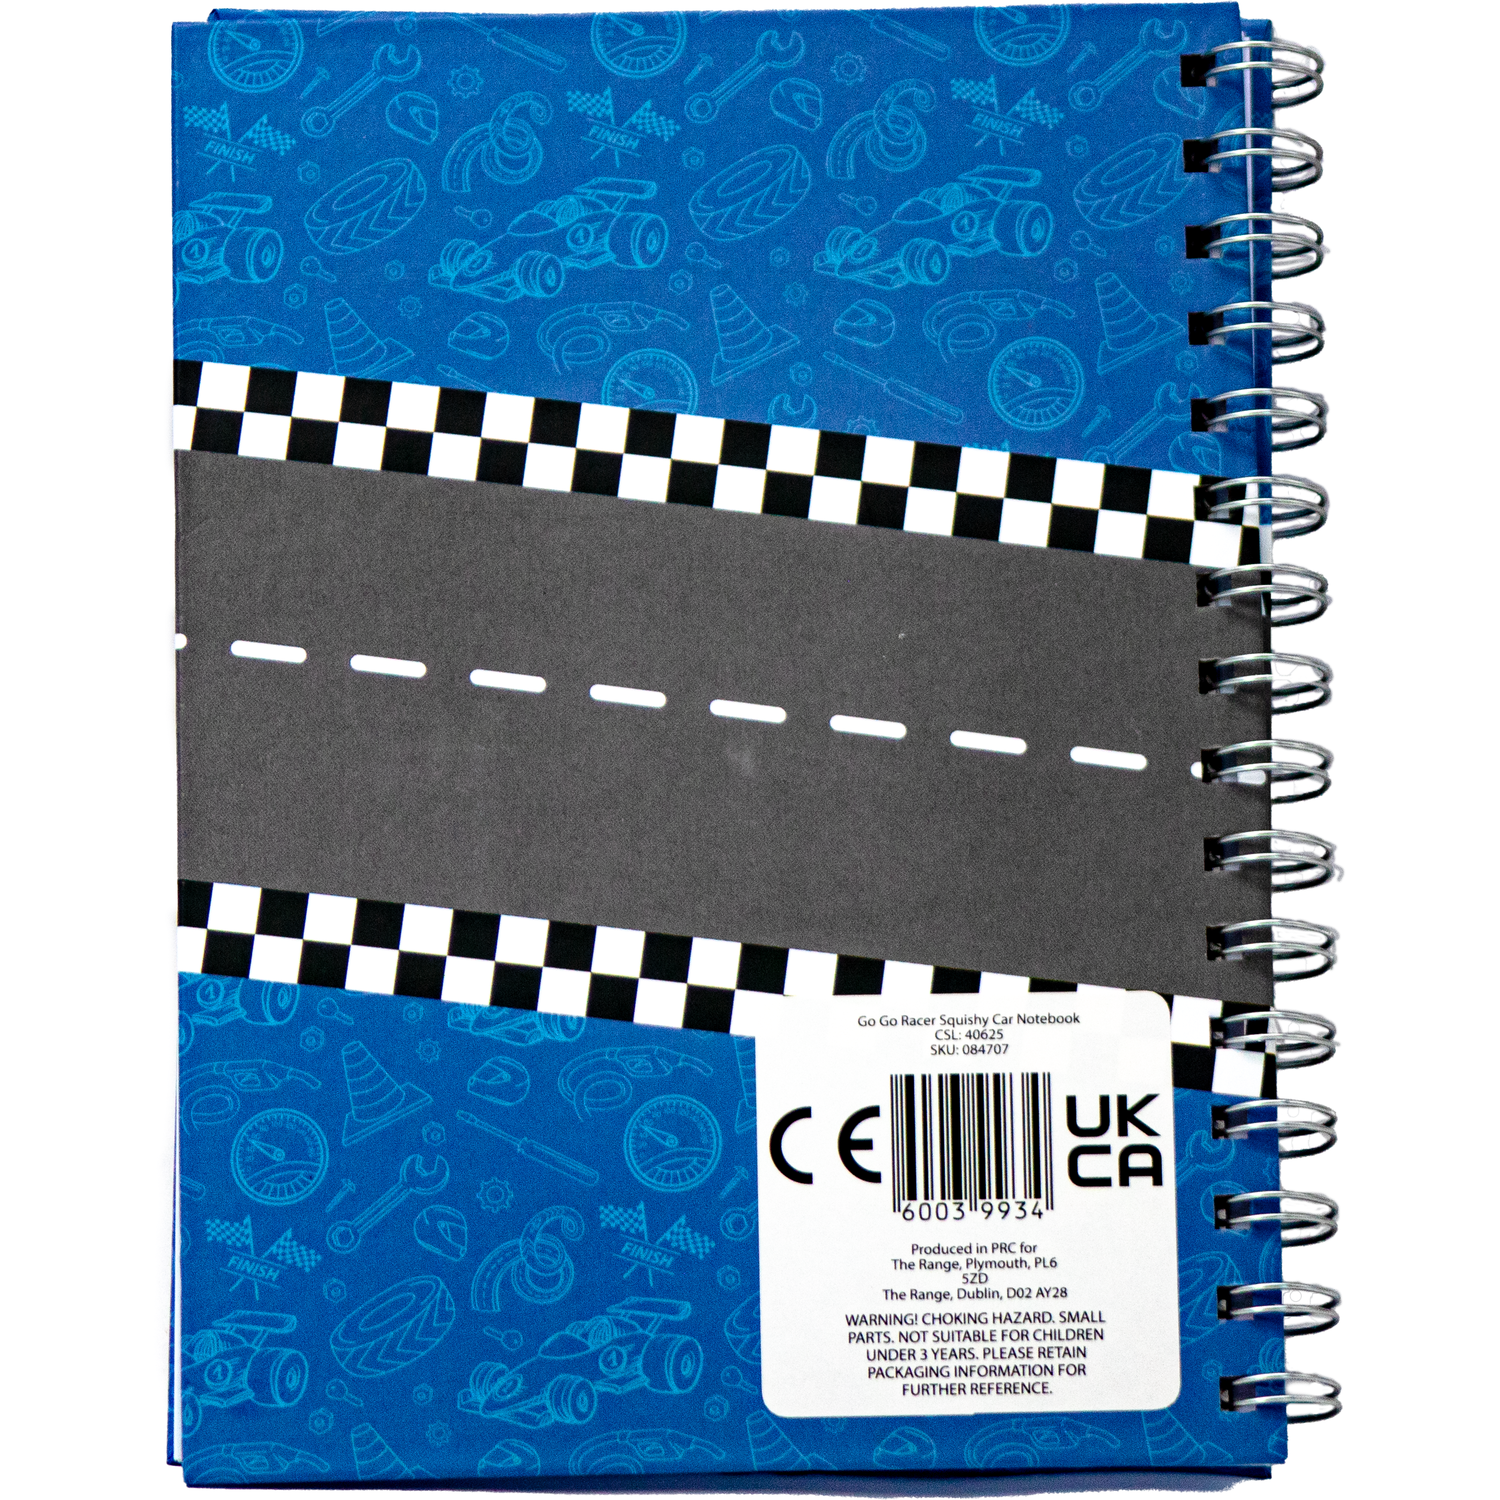 Go Go Racer Squishy Car Notebook - Blue Image 2